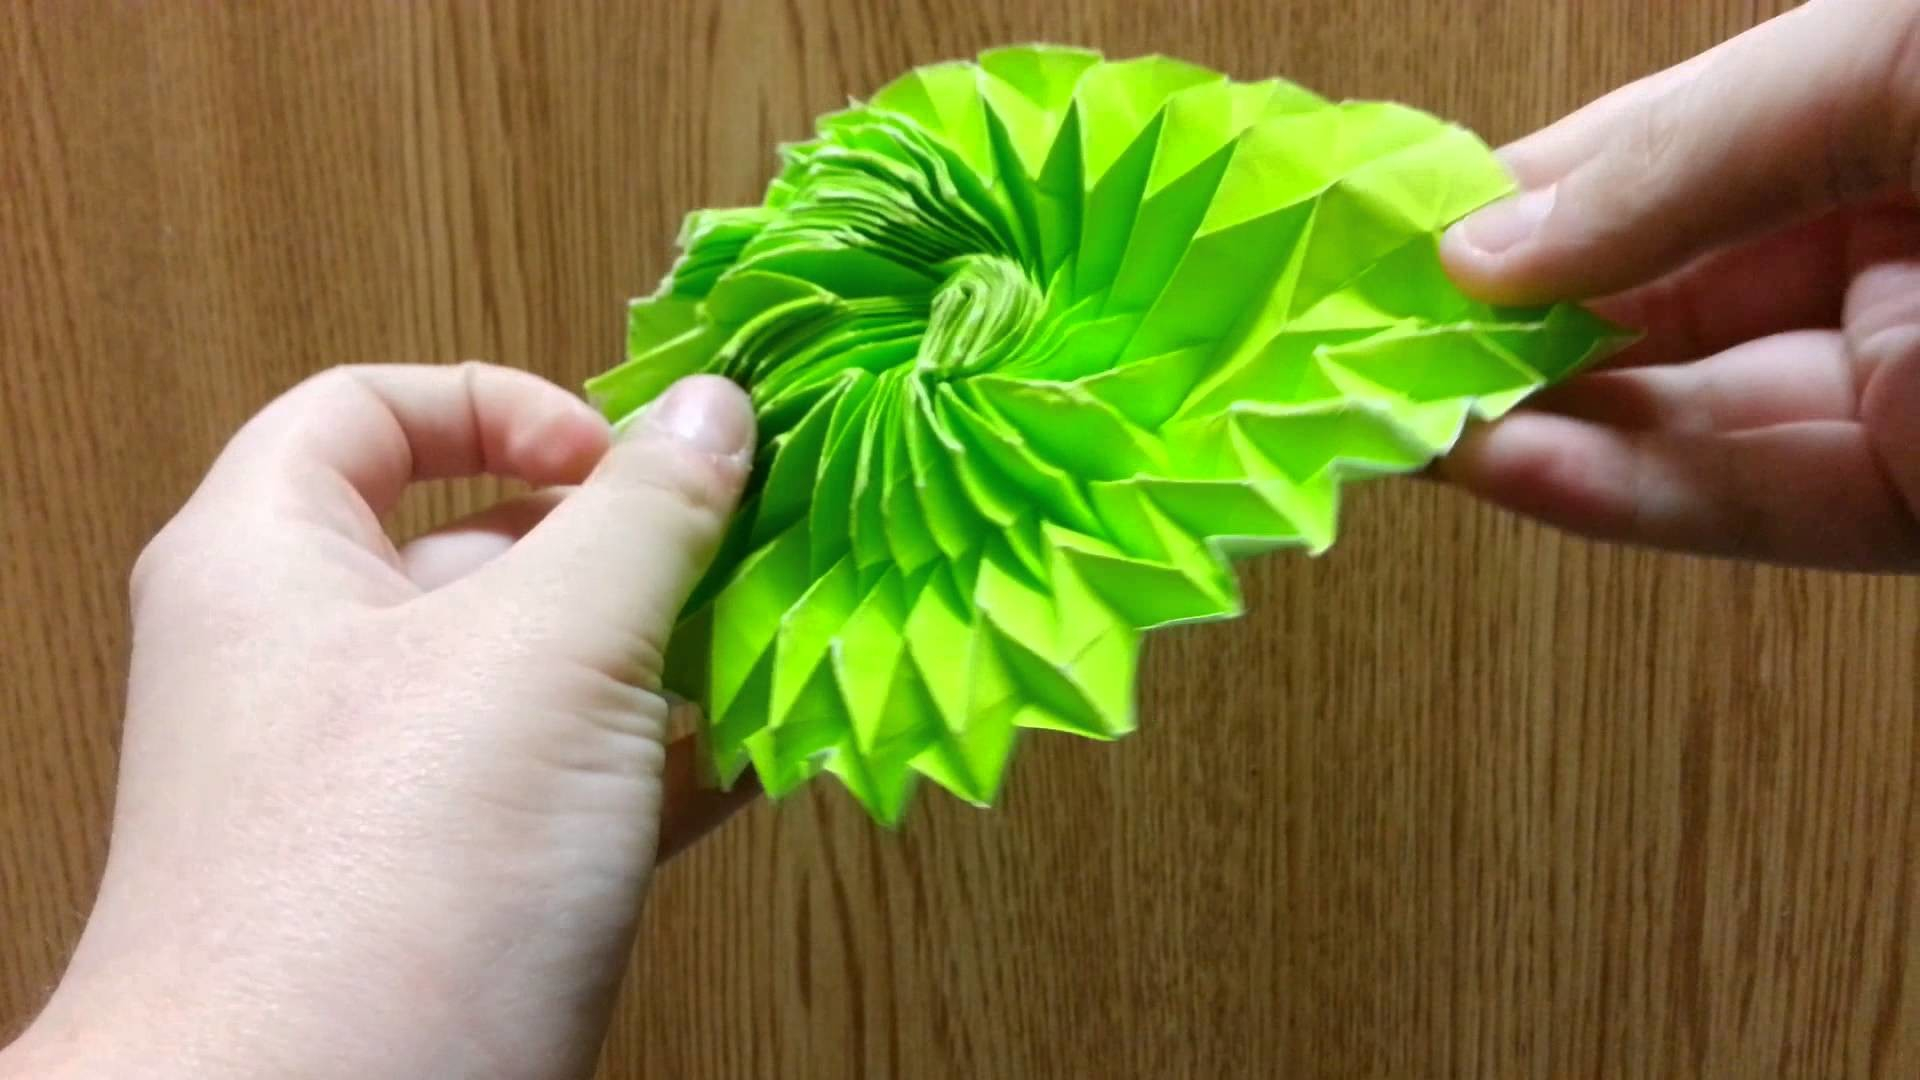 Jeremy Shafer Origami To Astonish And Amuse Pdf Origami Flasher Big Bang Designed Jeremy Shafer Not A Tutorial